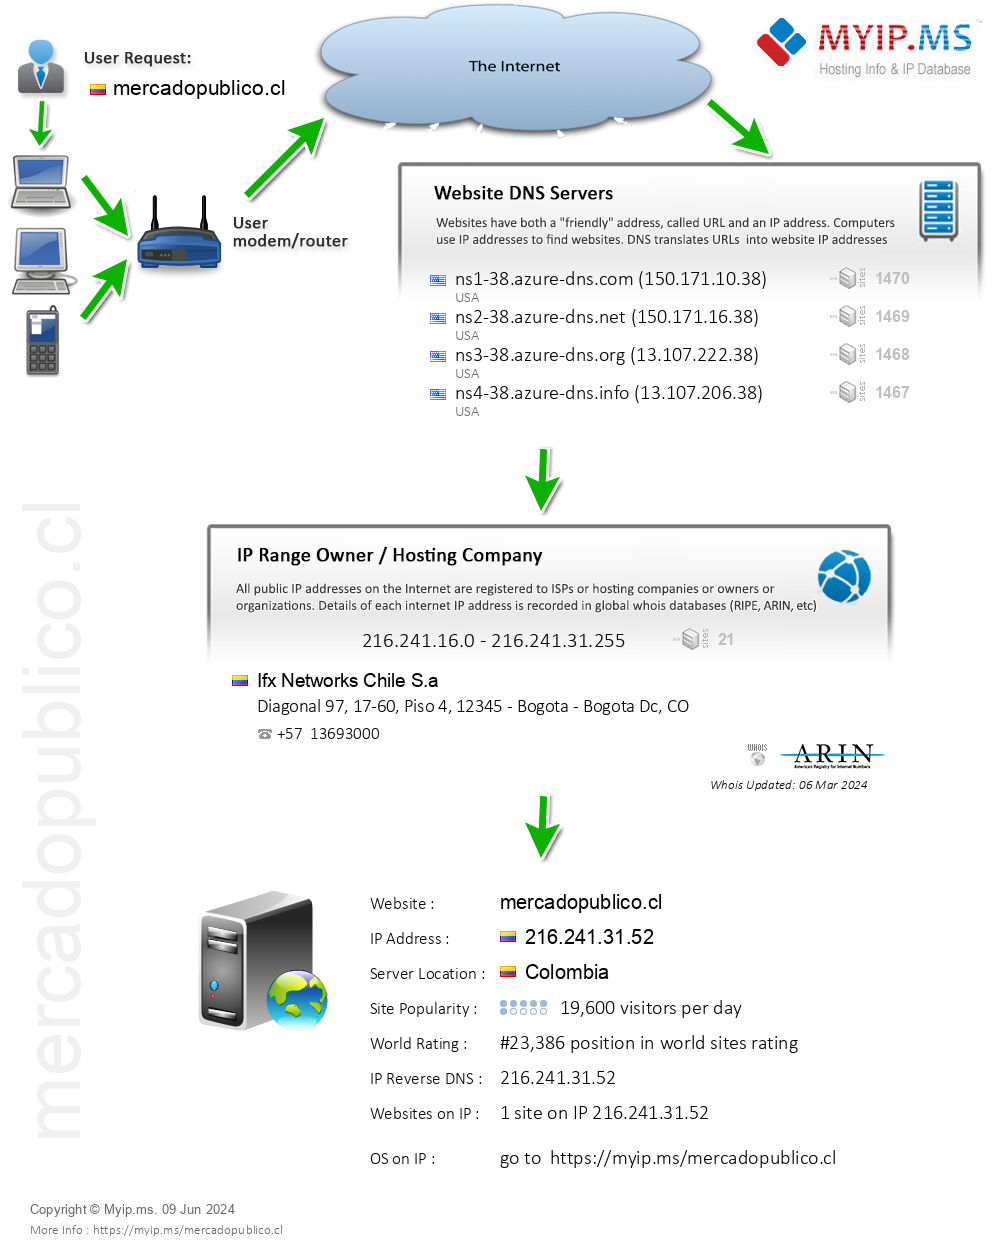 Mercadopublico.cl - Website Hosting Visual IP Diagram